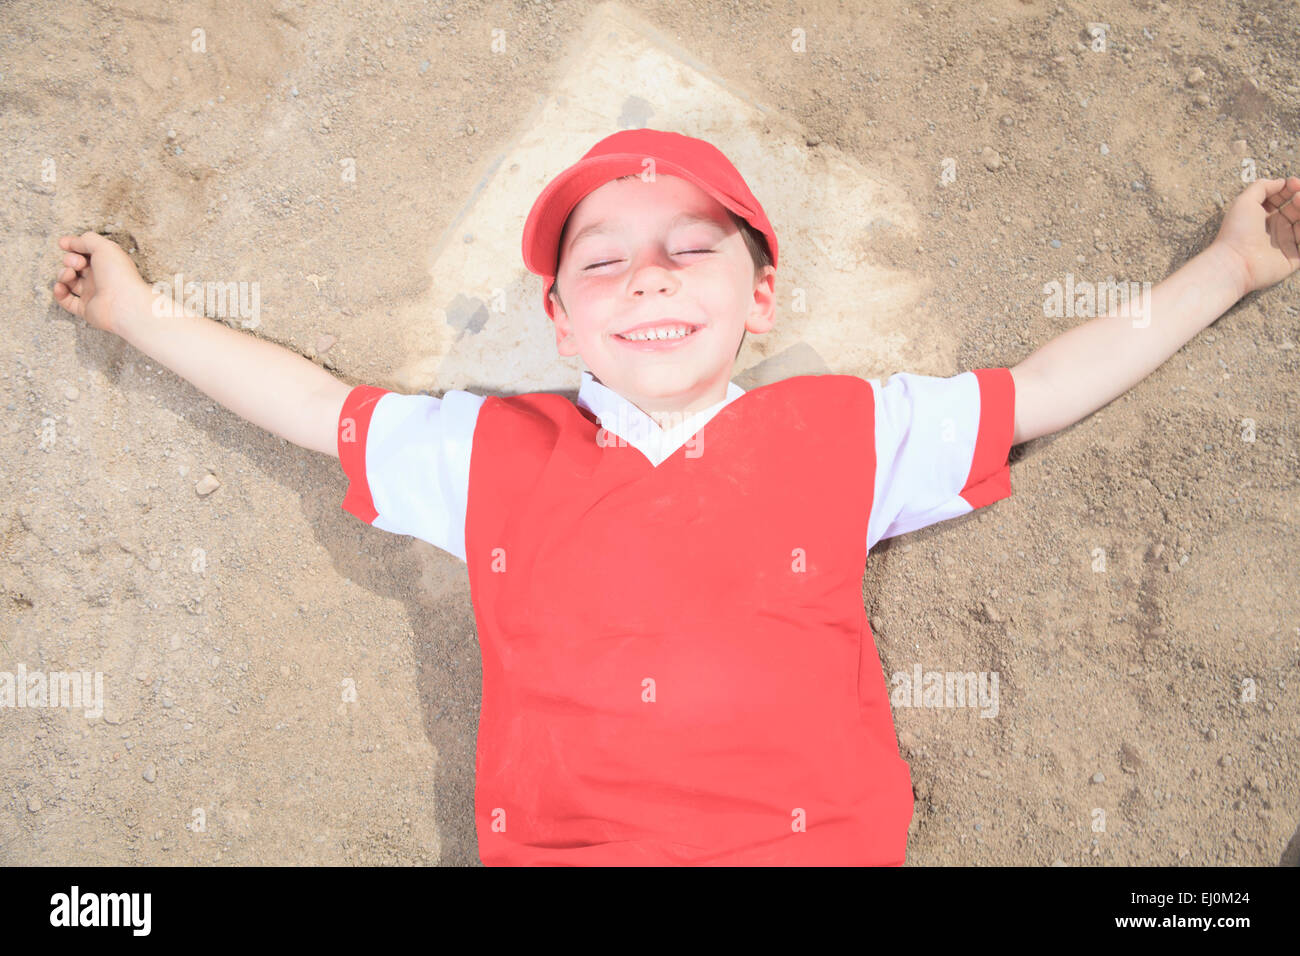 A nice child happy to play baseball Stock Photo